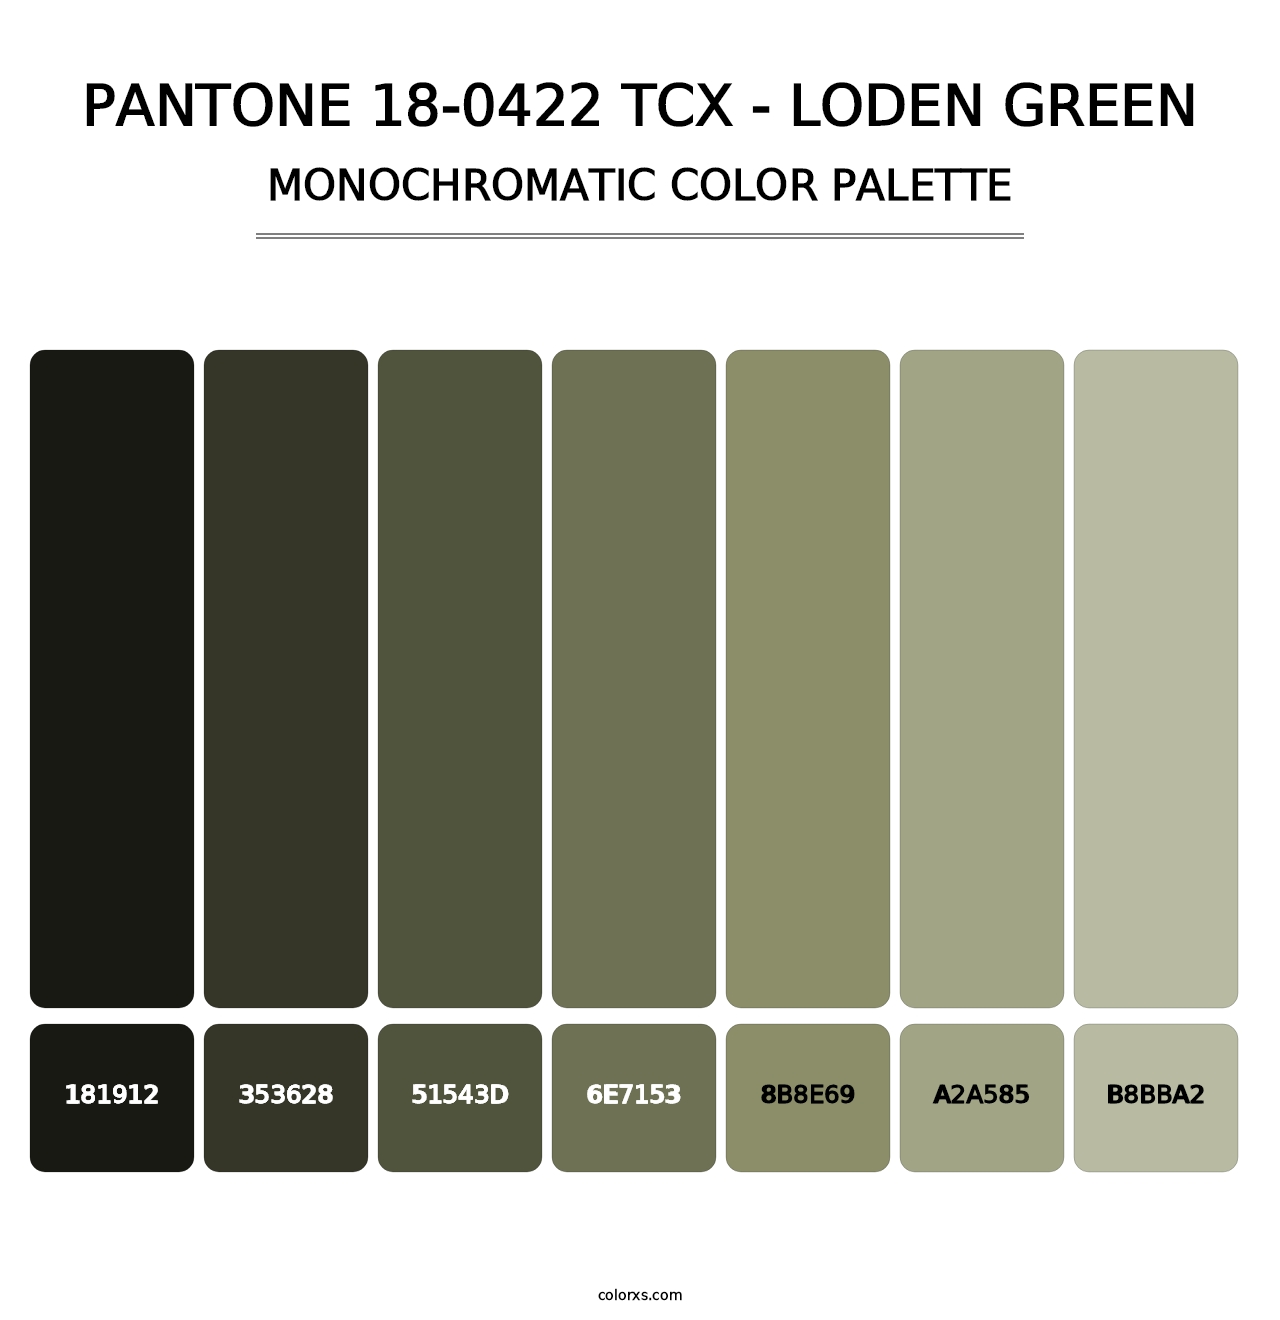 PANTONE 18-0422 TCX - Loden Green - Monochromatic Color Palette